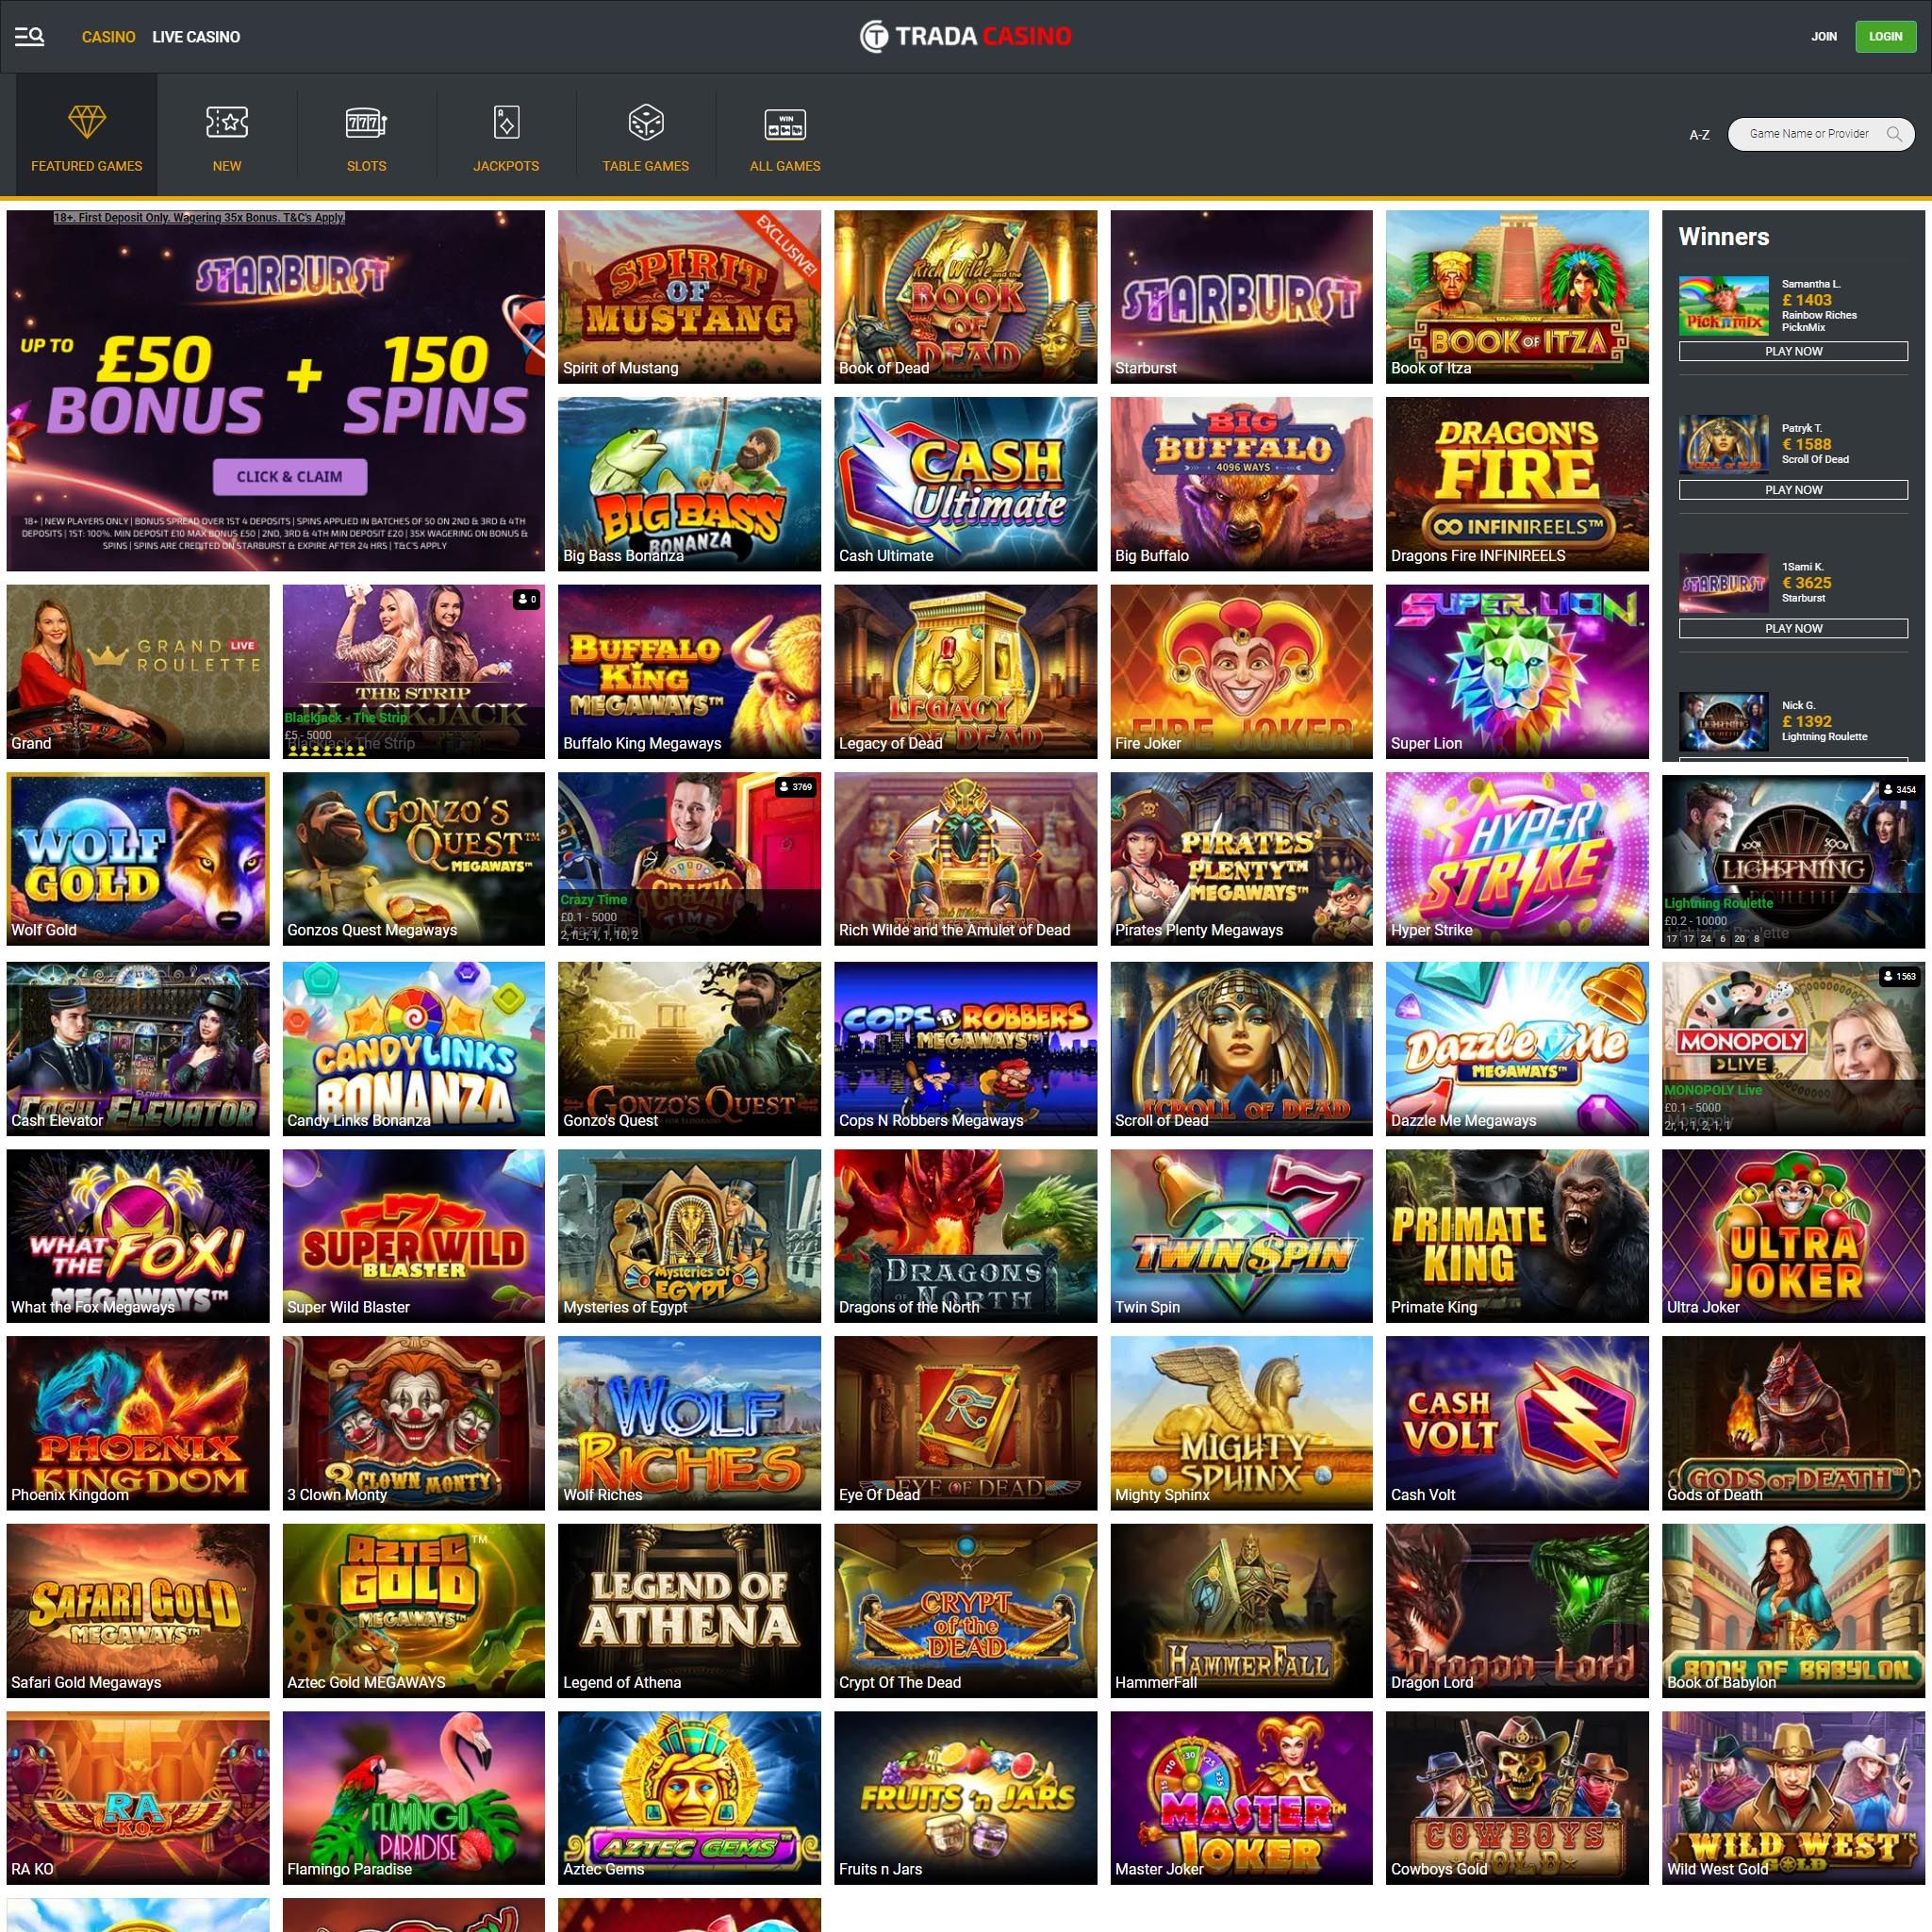 Trada Casino full games catalogue